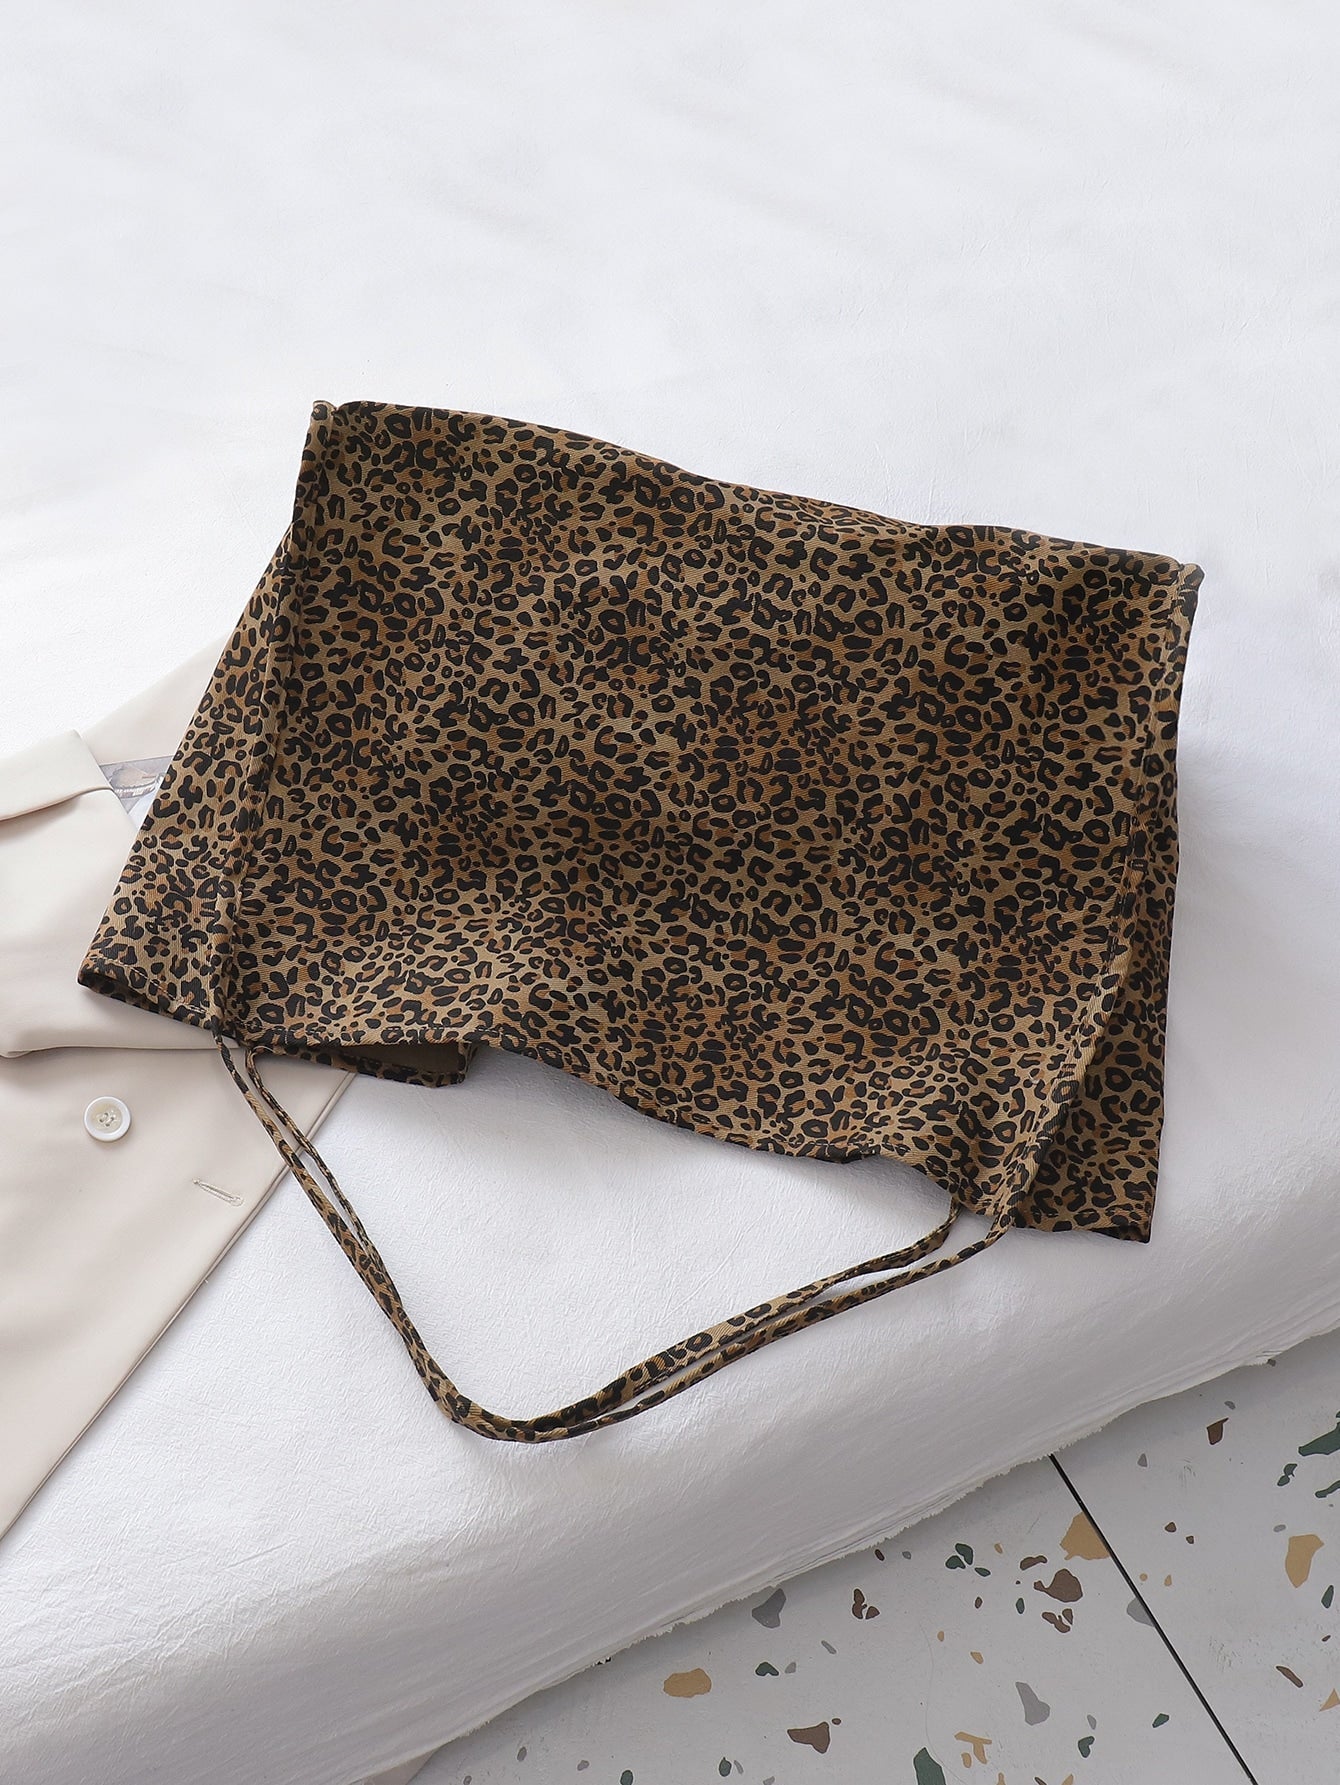 Leopard Large Capacity Tote Bag